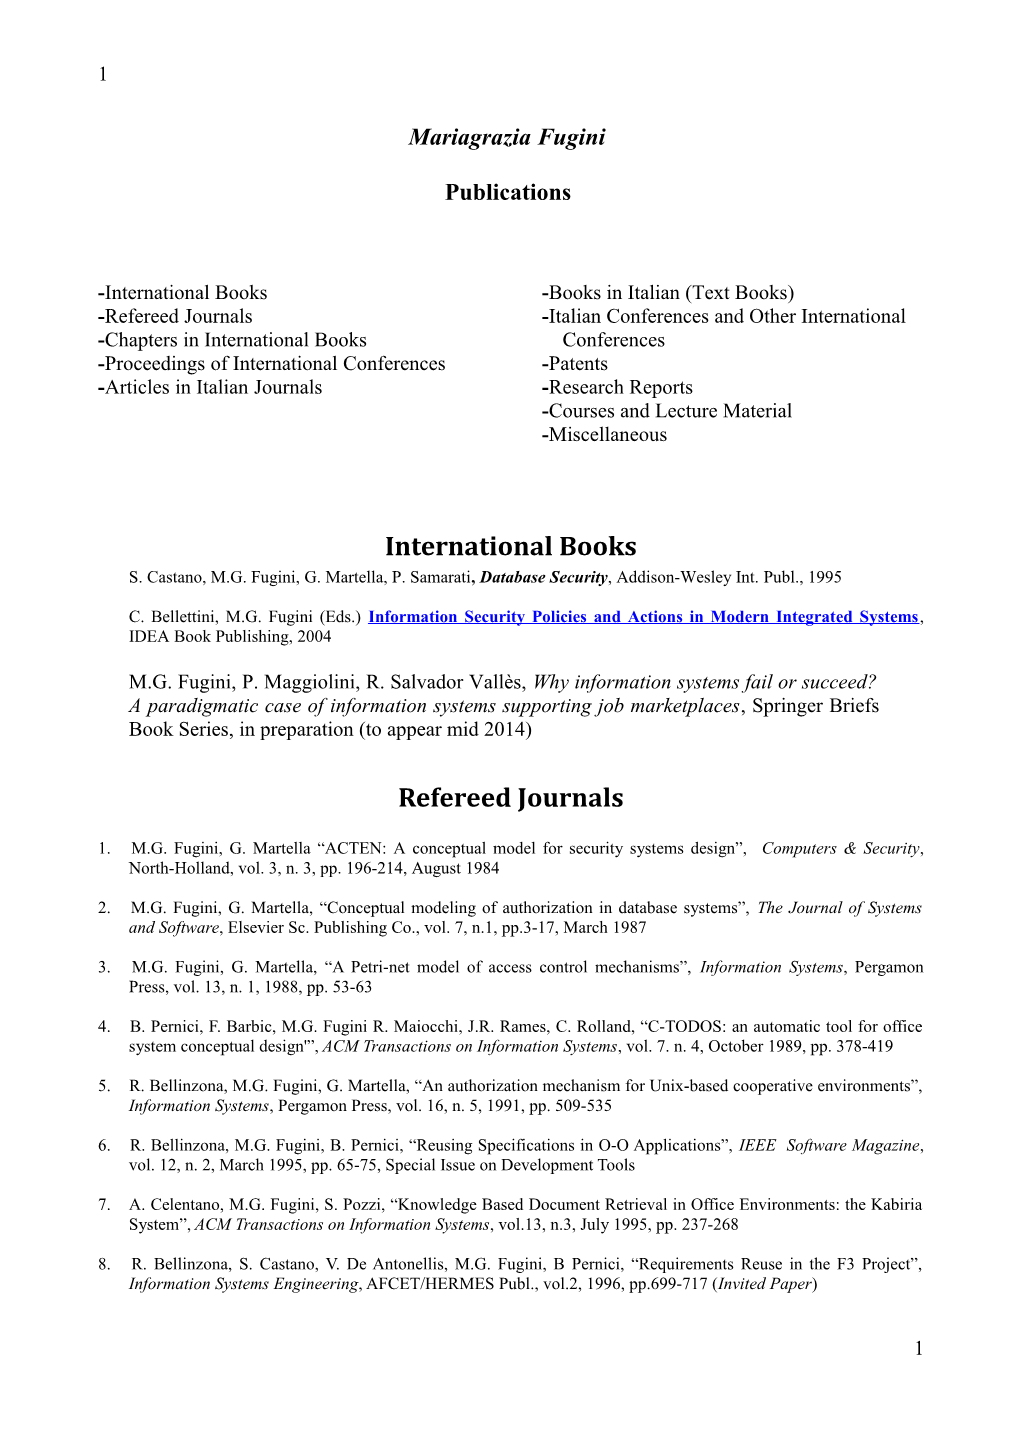 International Books